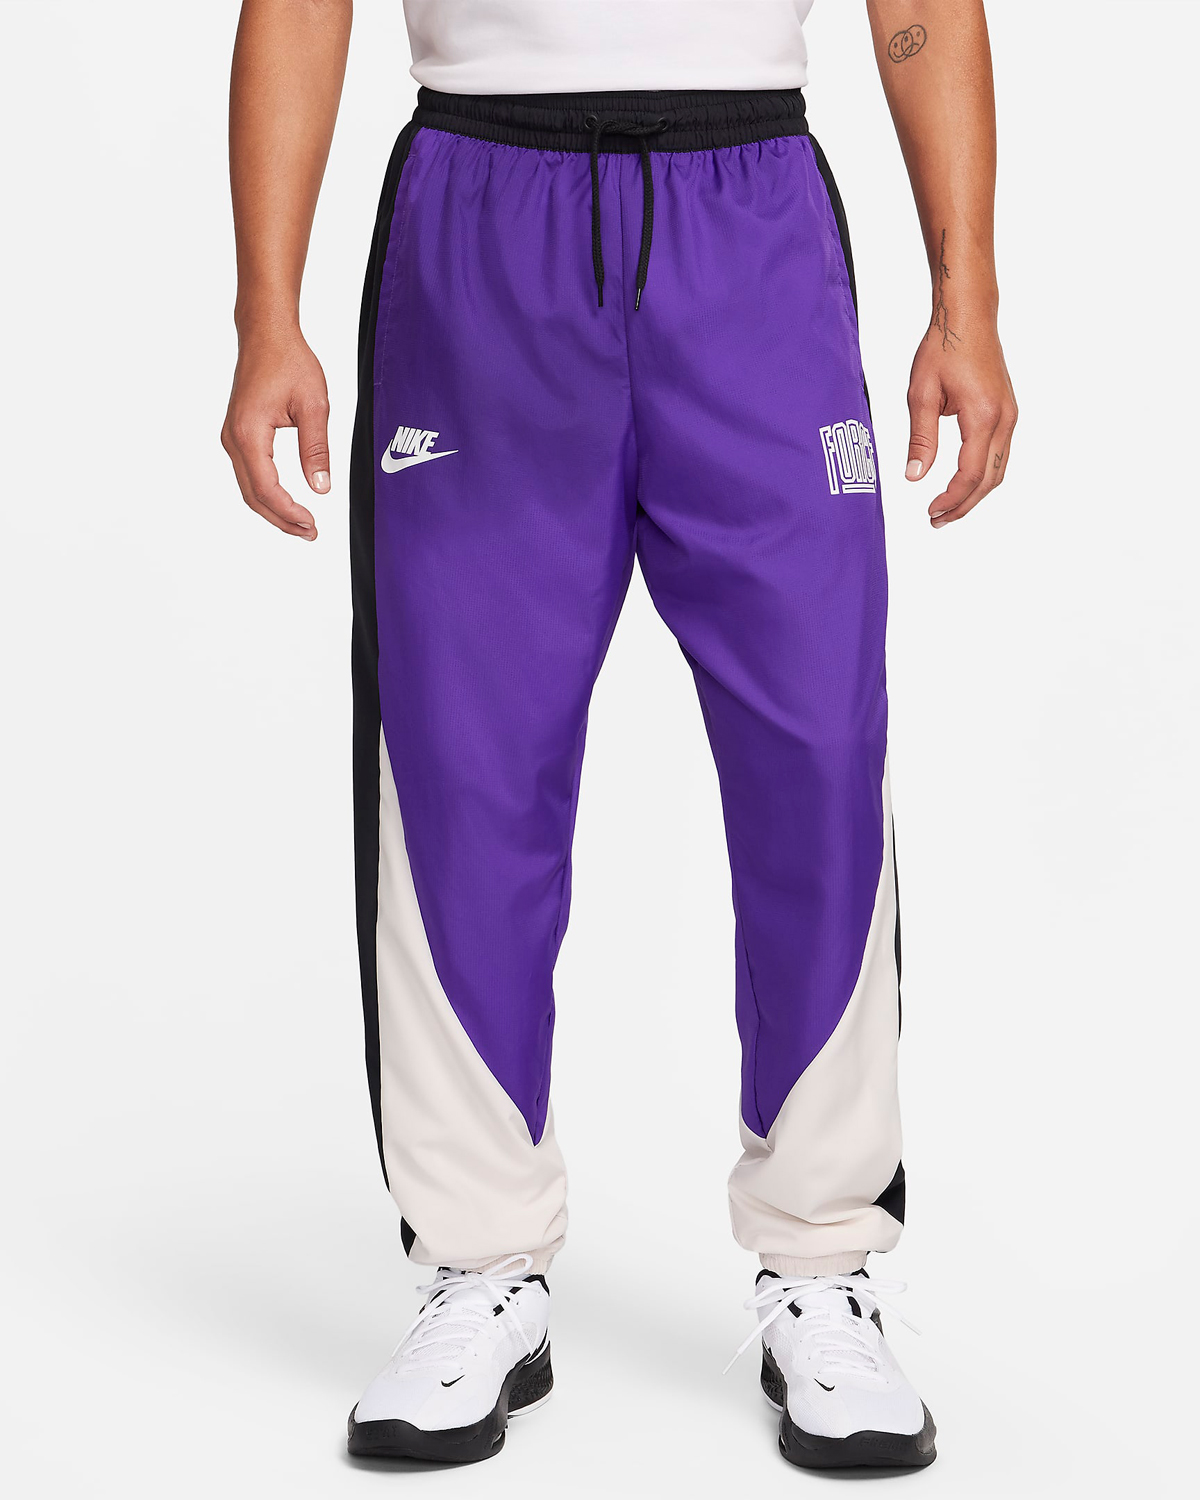 Nike Starting 5 Pants Pants Field Purple